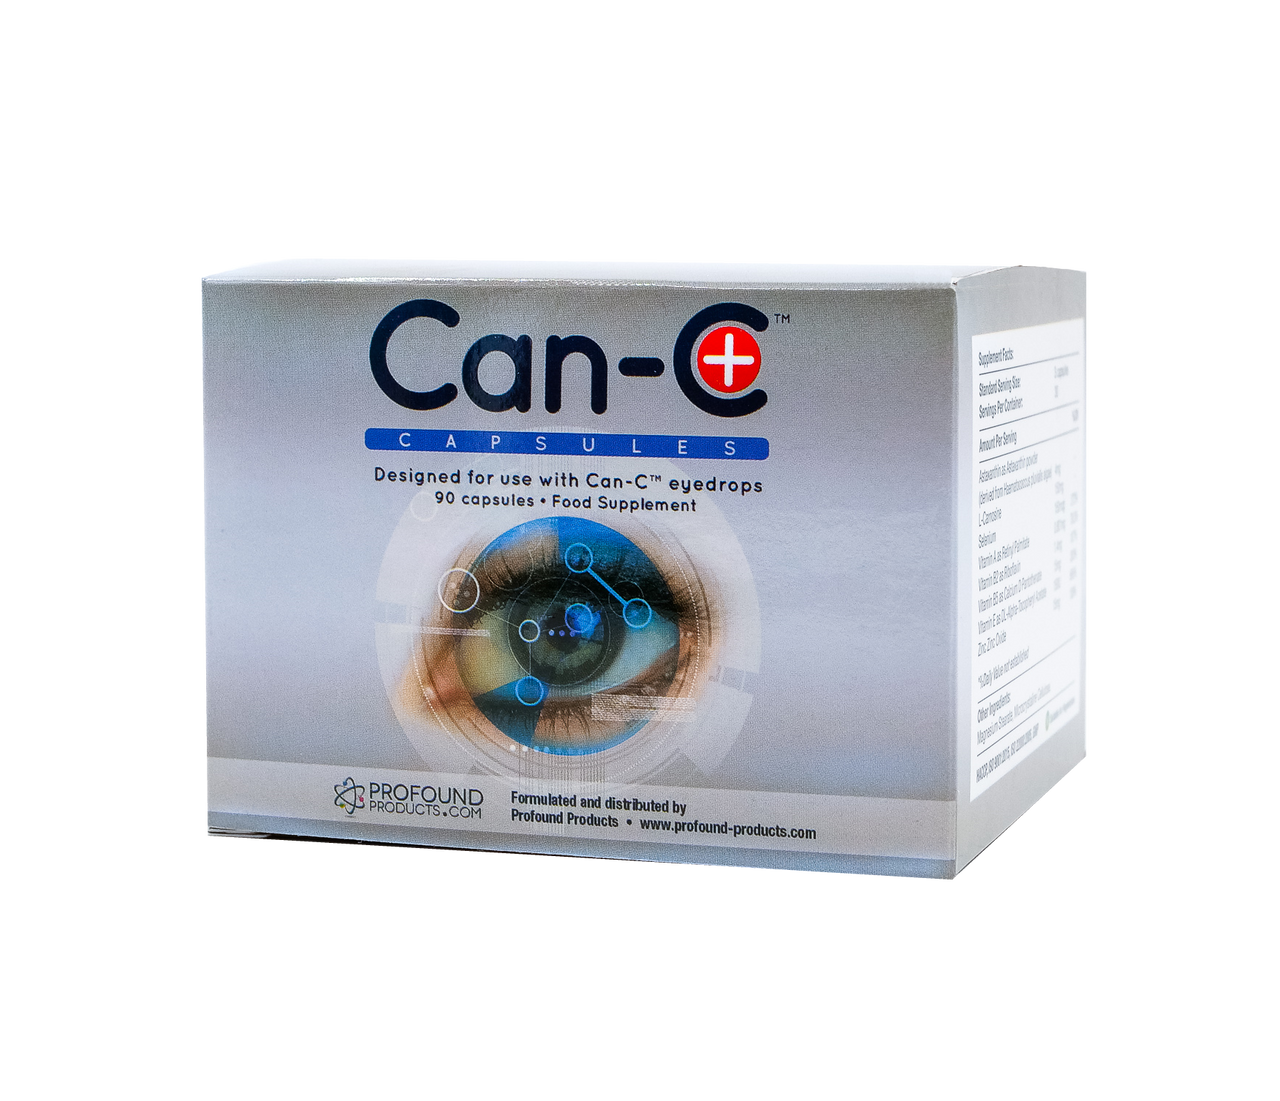 Can-c Eye Drops